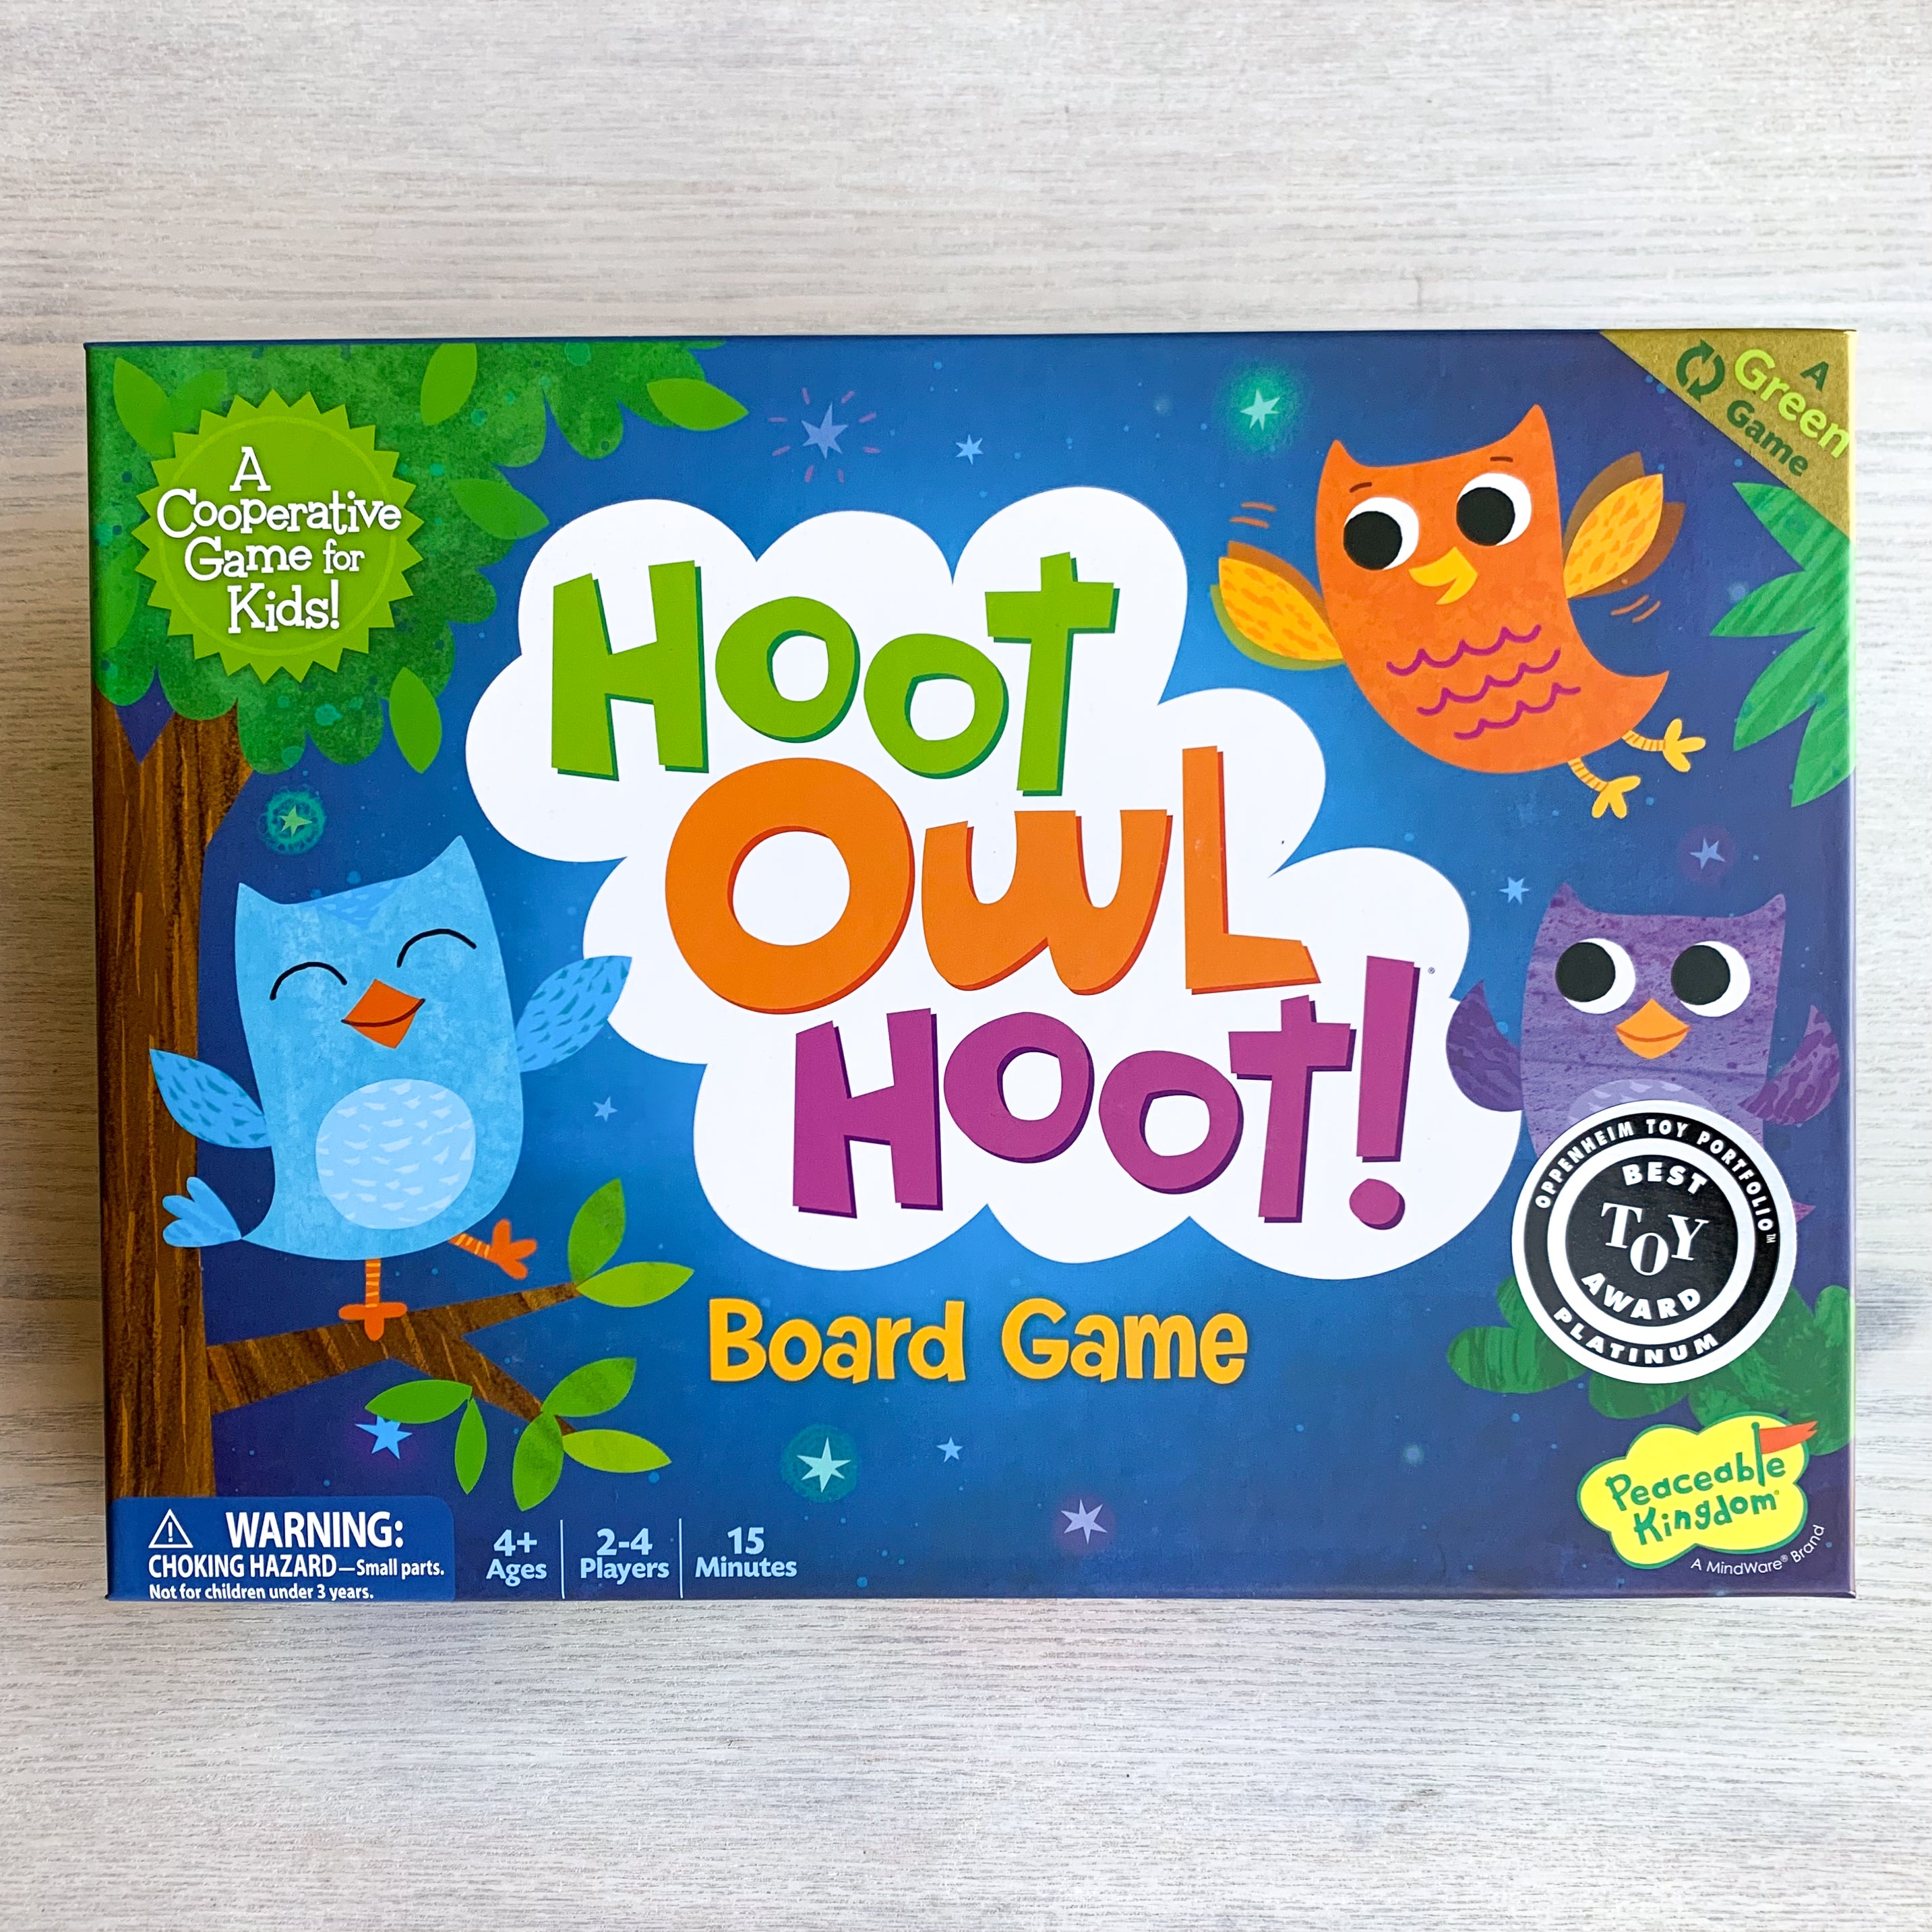 Toys & Games Peaceable Kingdom Hoot Owl Hoot! Award Winning